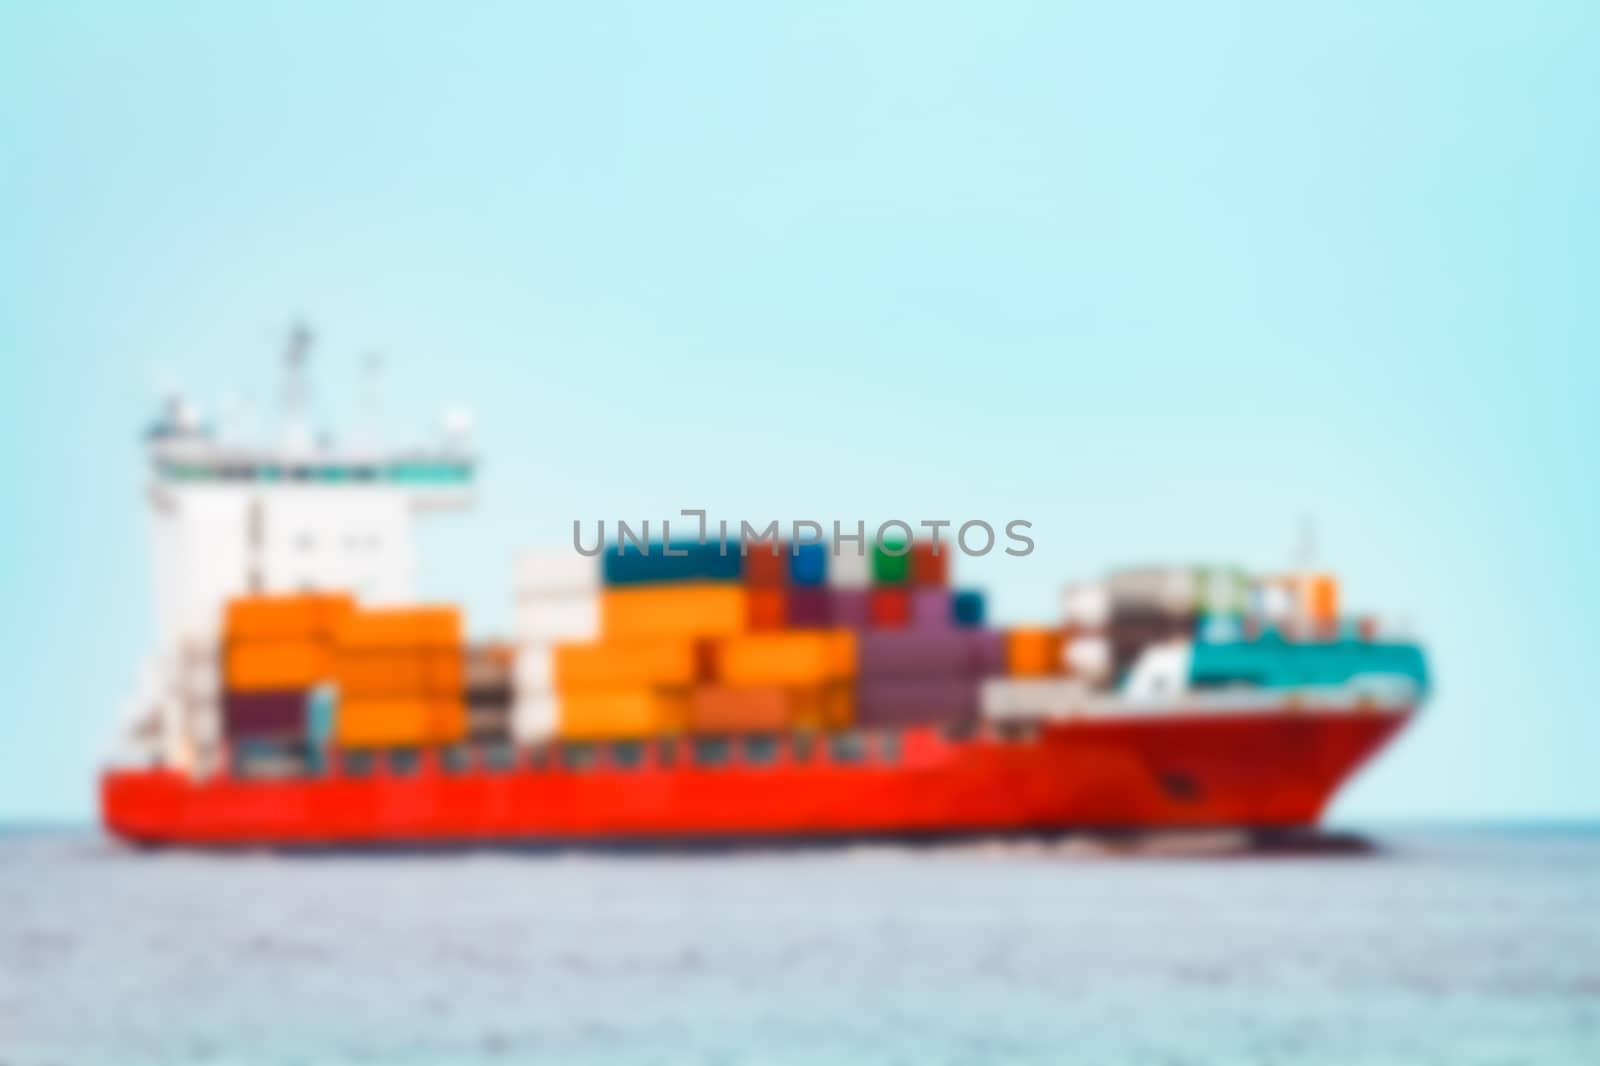 Red cargo ship - soft lens bokeh image. Defocused background